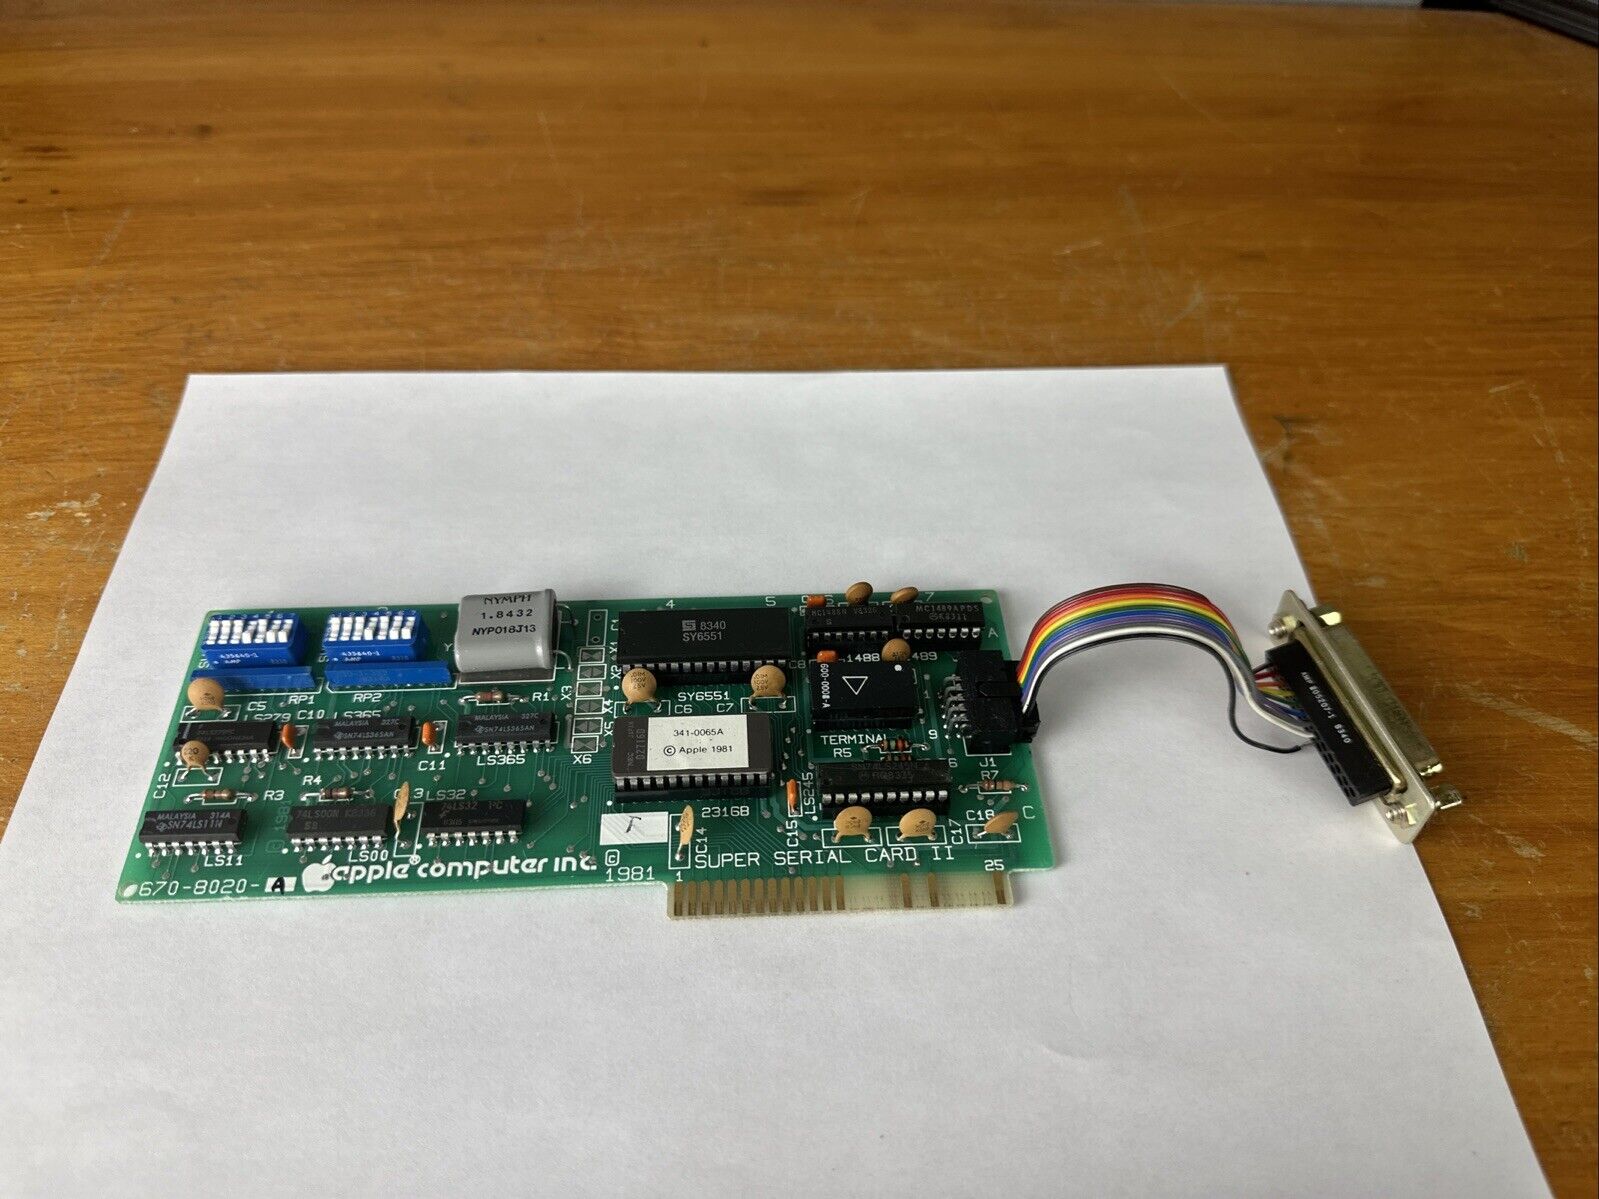 Apple Super Serial Card II 670-8020 with Cable – Apple II, II Plus, IIe, & IIGS